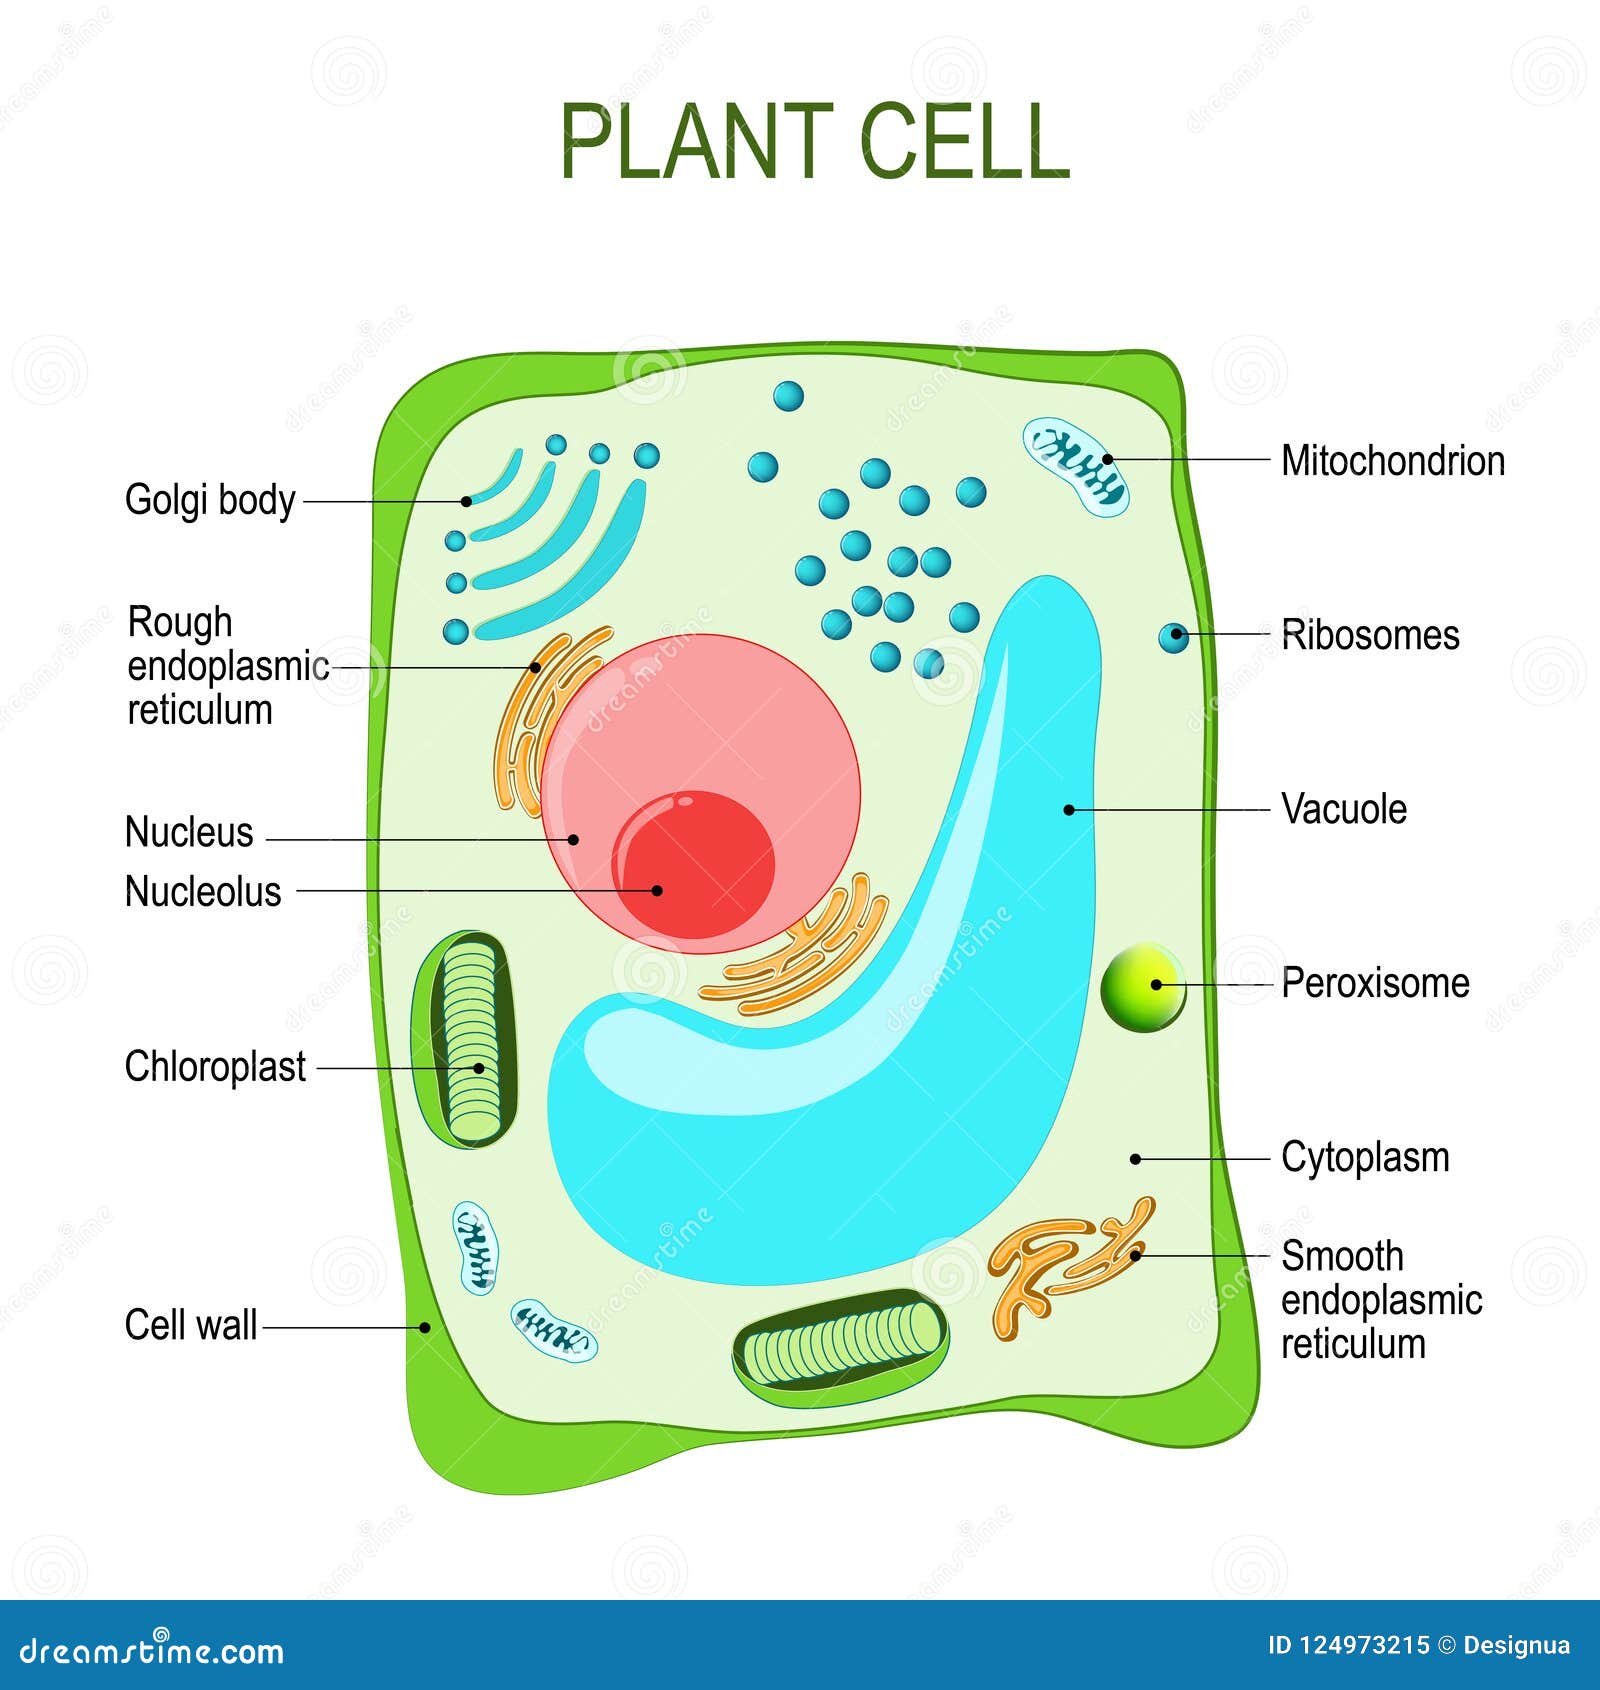 Eukaryotic Cells | BioNinja